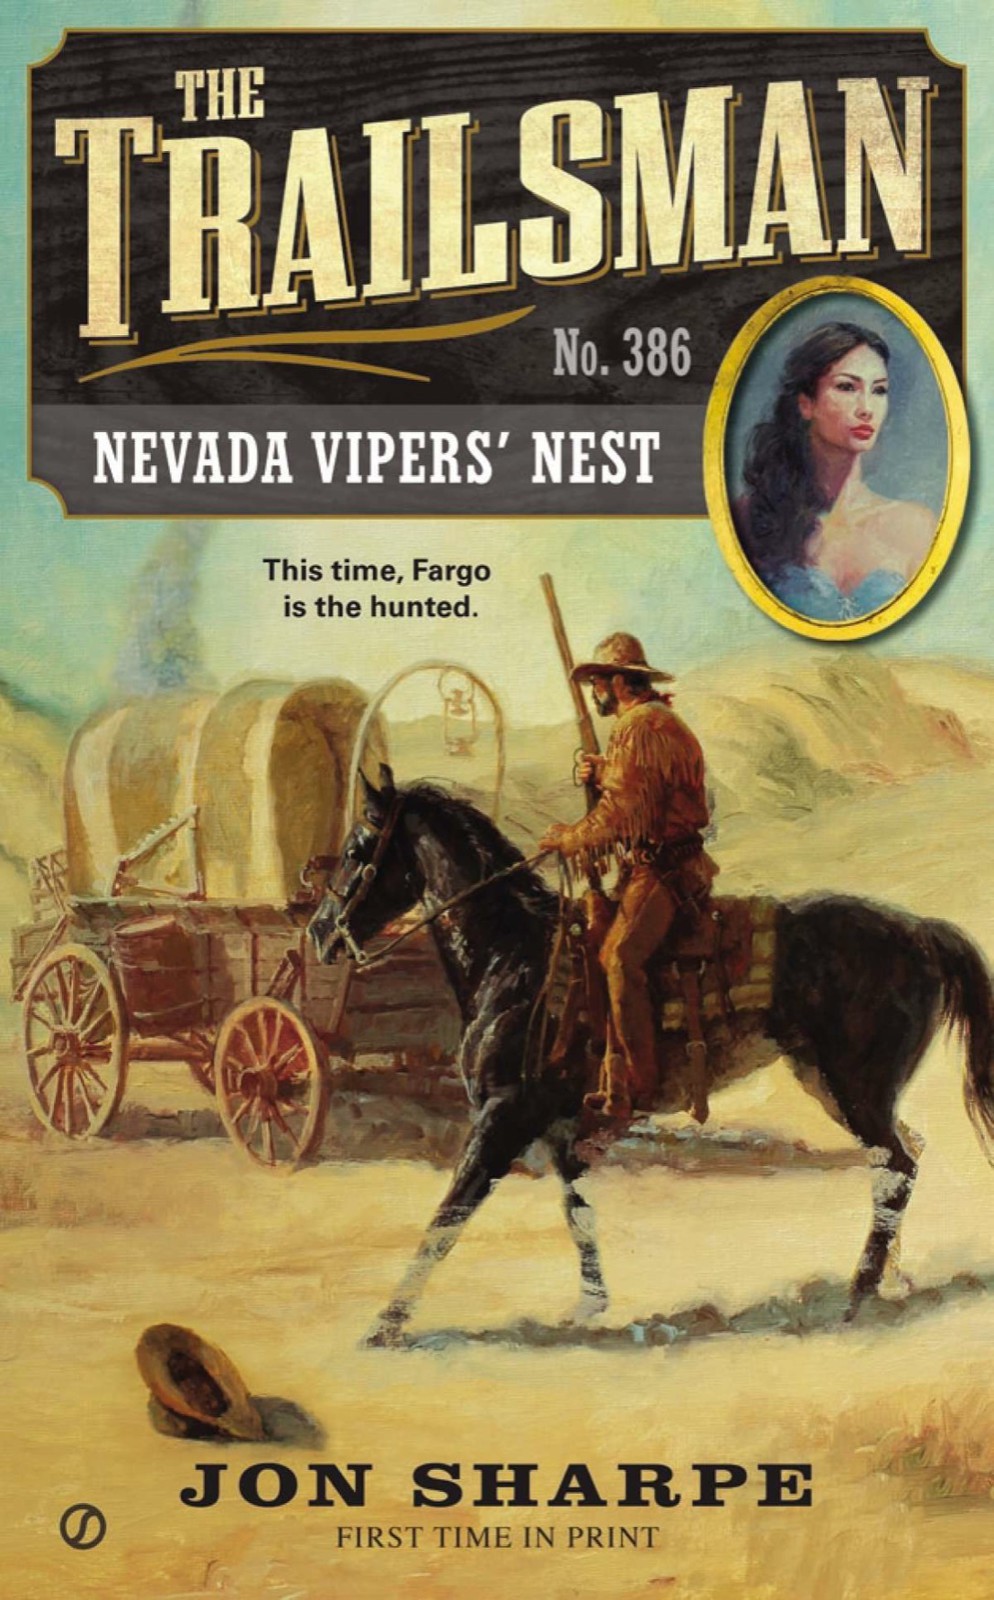 Nevada Vipers' Nest by Jon Sharpe